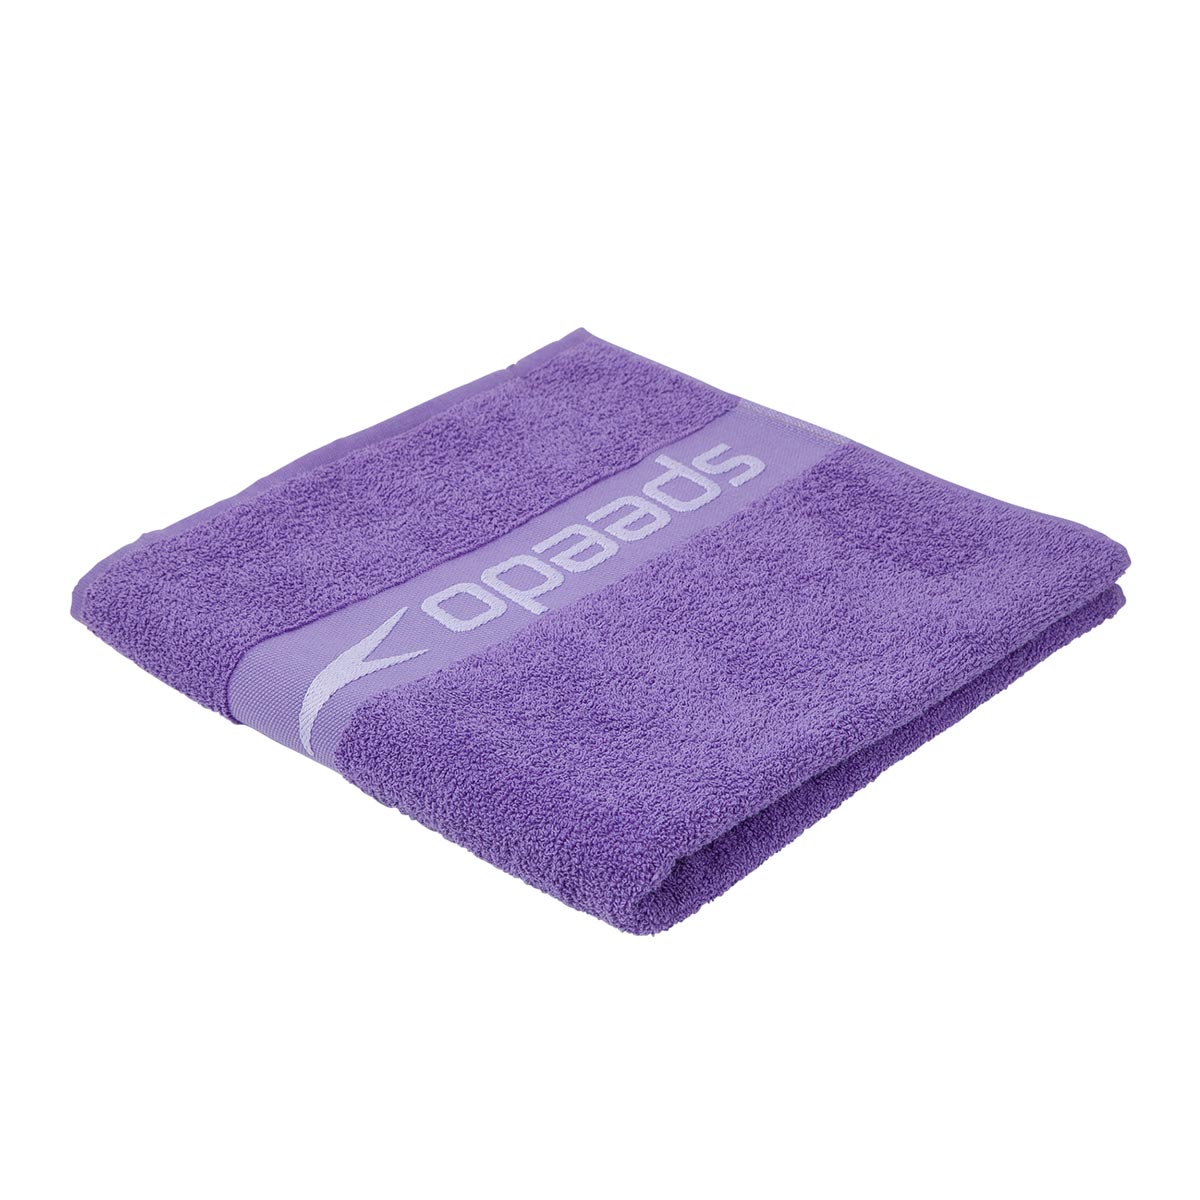 Speedo Border Towel - Ultra Violet / Hard Candy